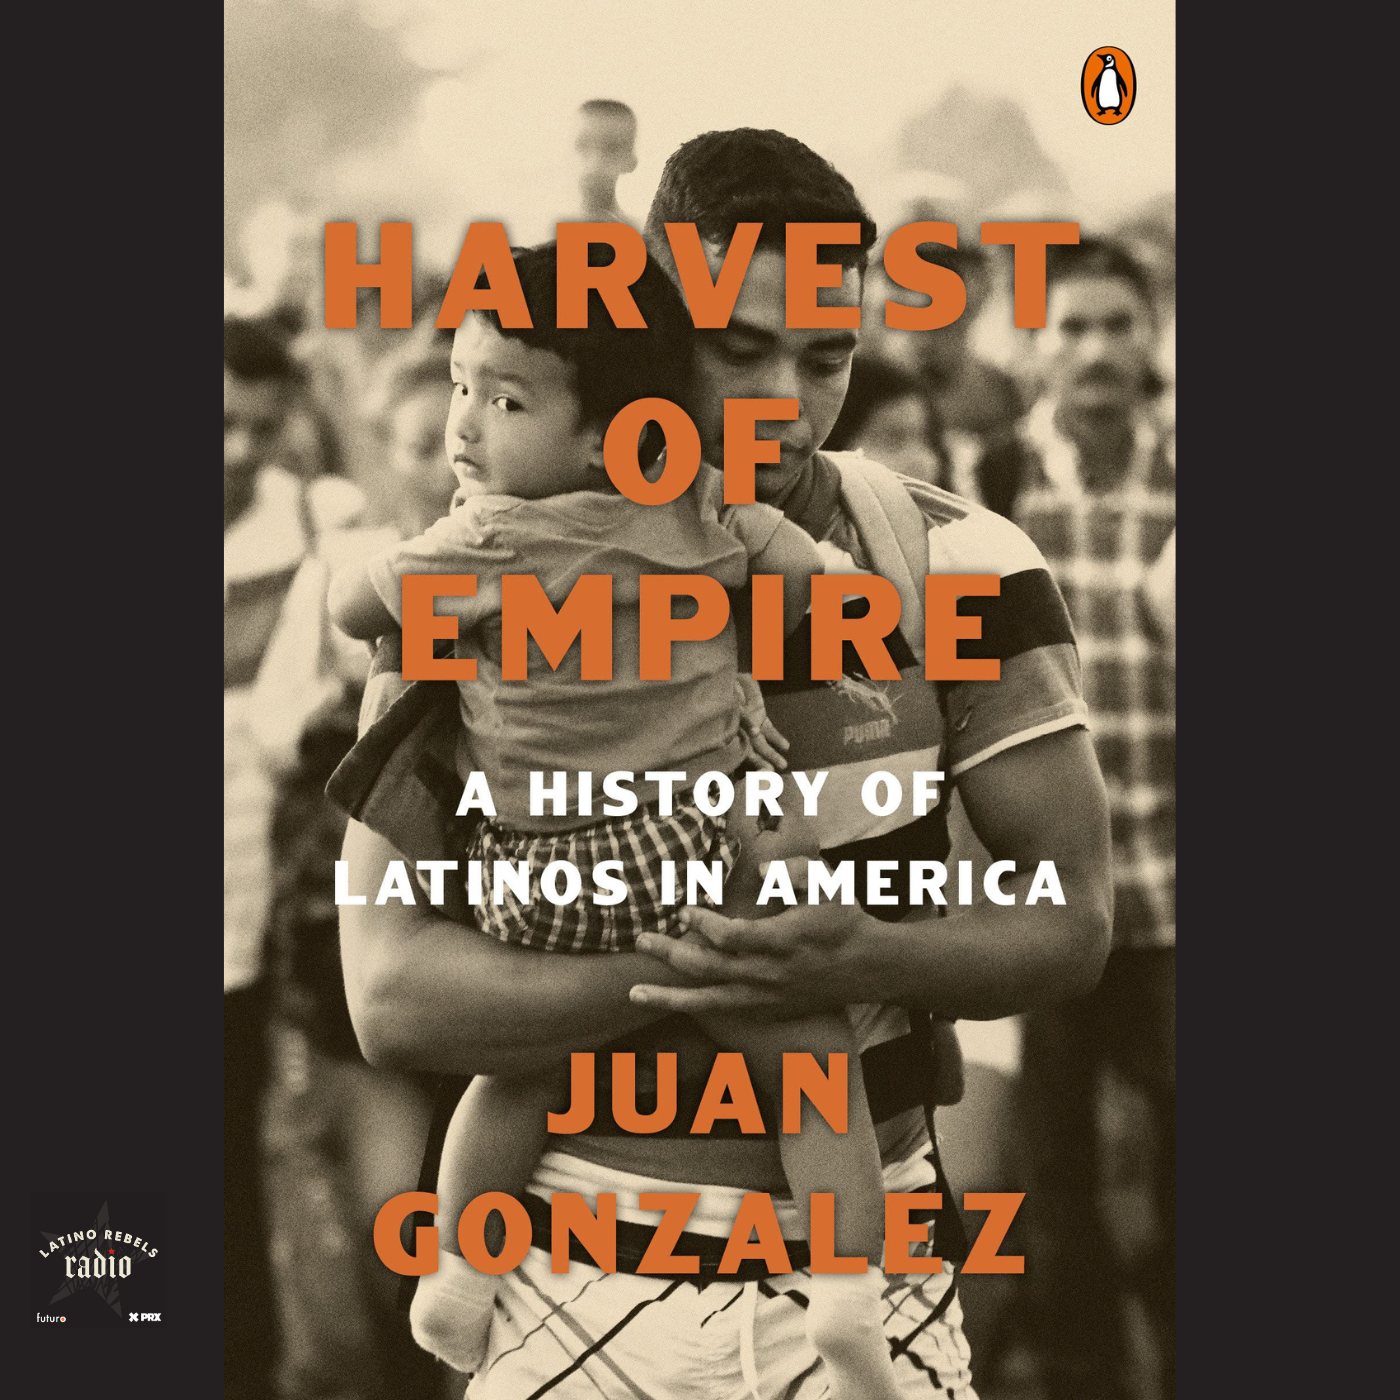 From 2022: Juan González’s Harvest of Empire